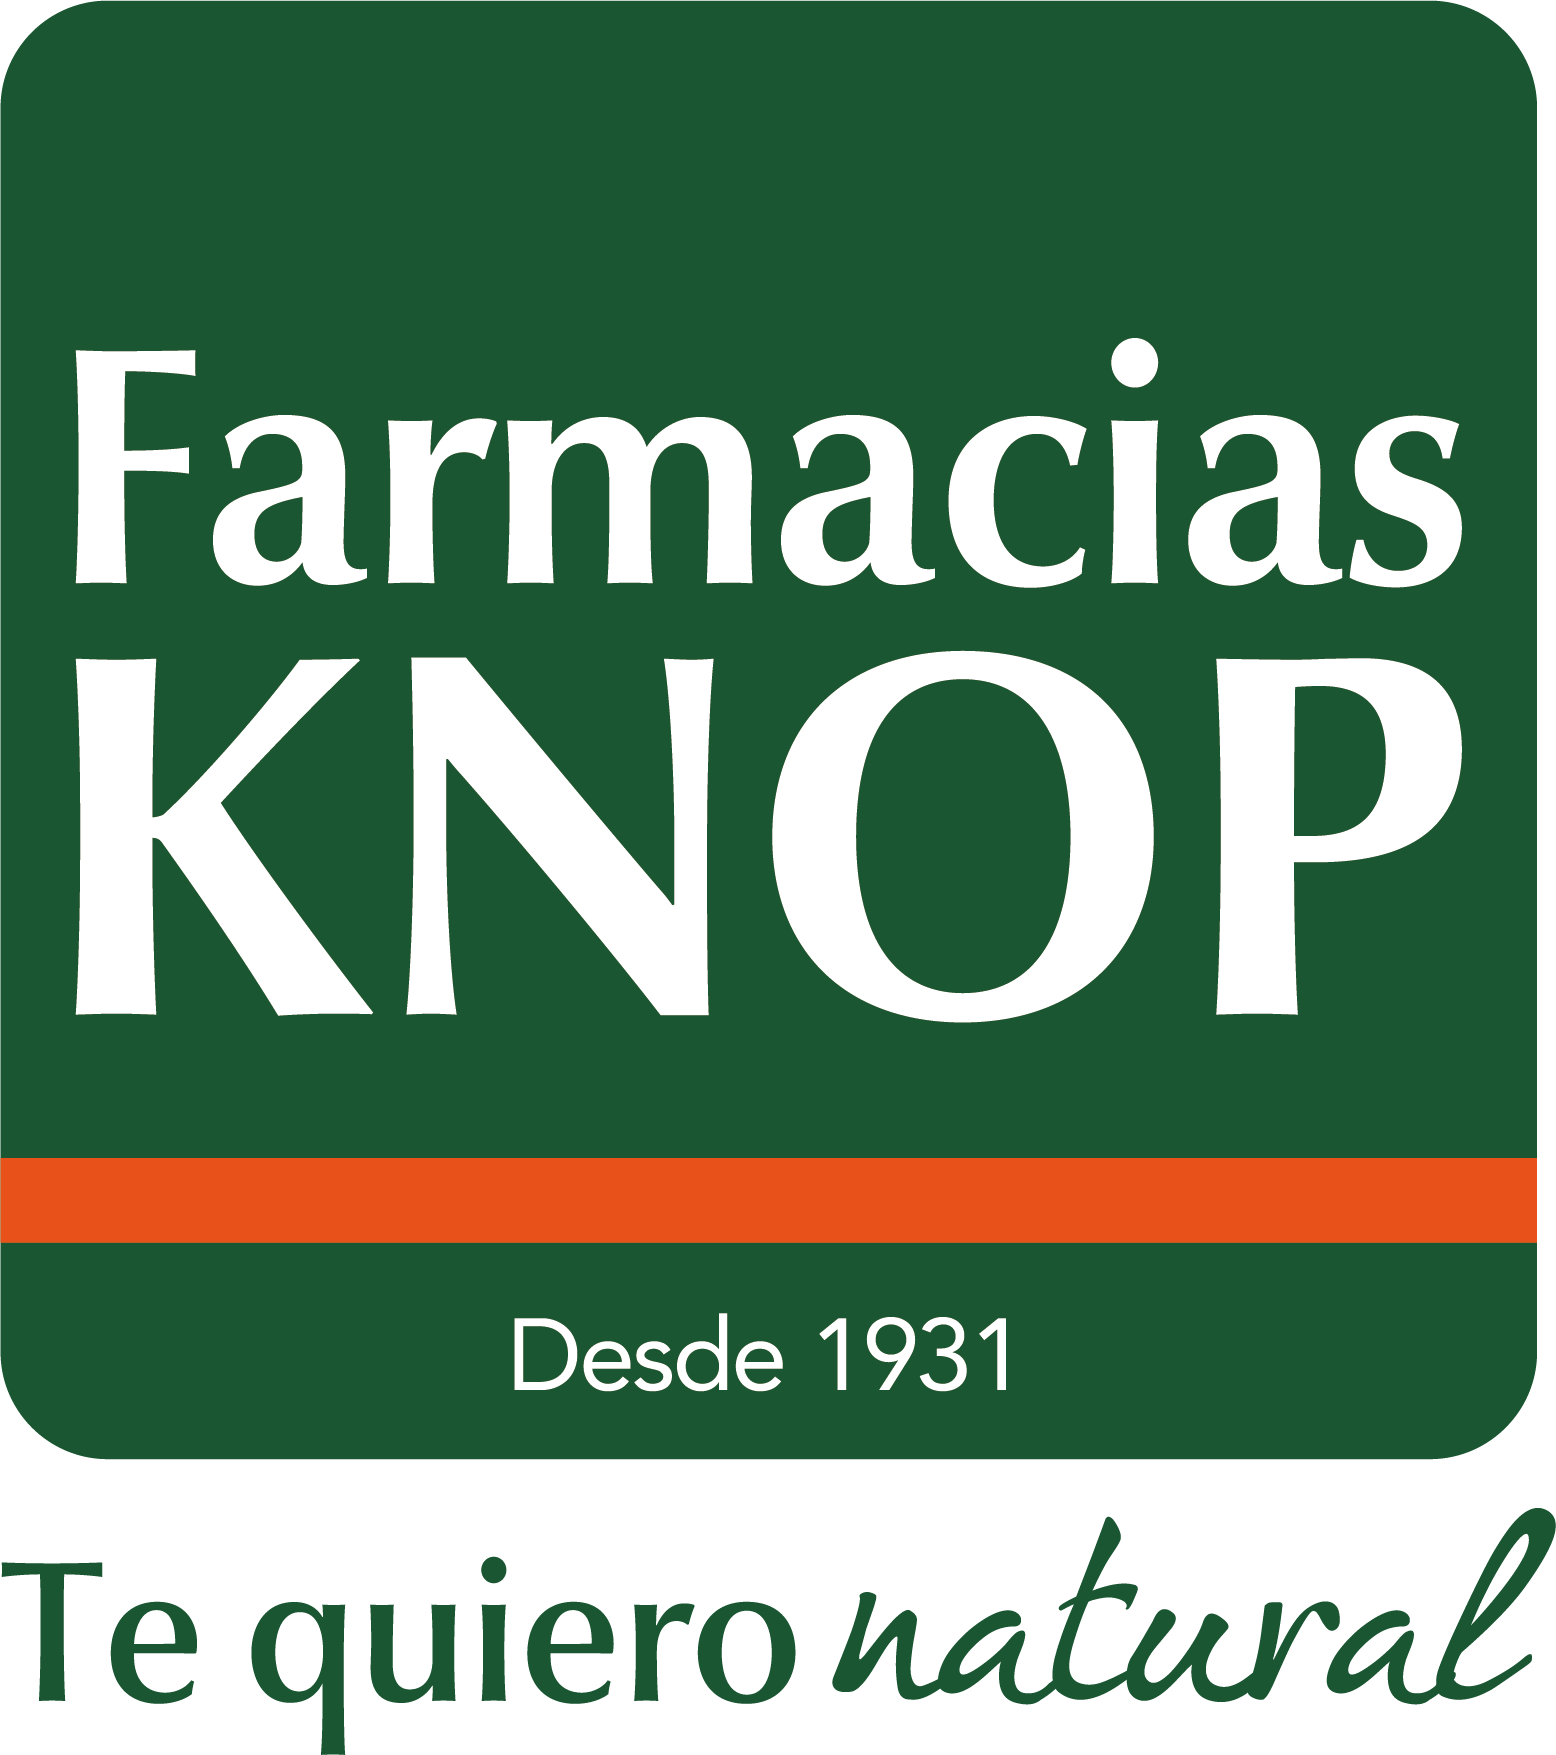 Farmacias Knop - Logo